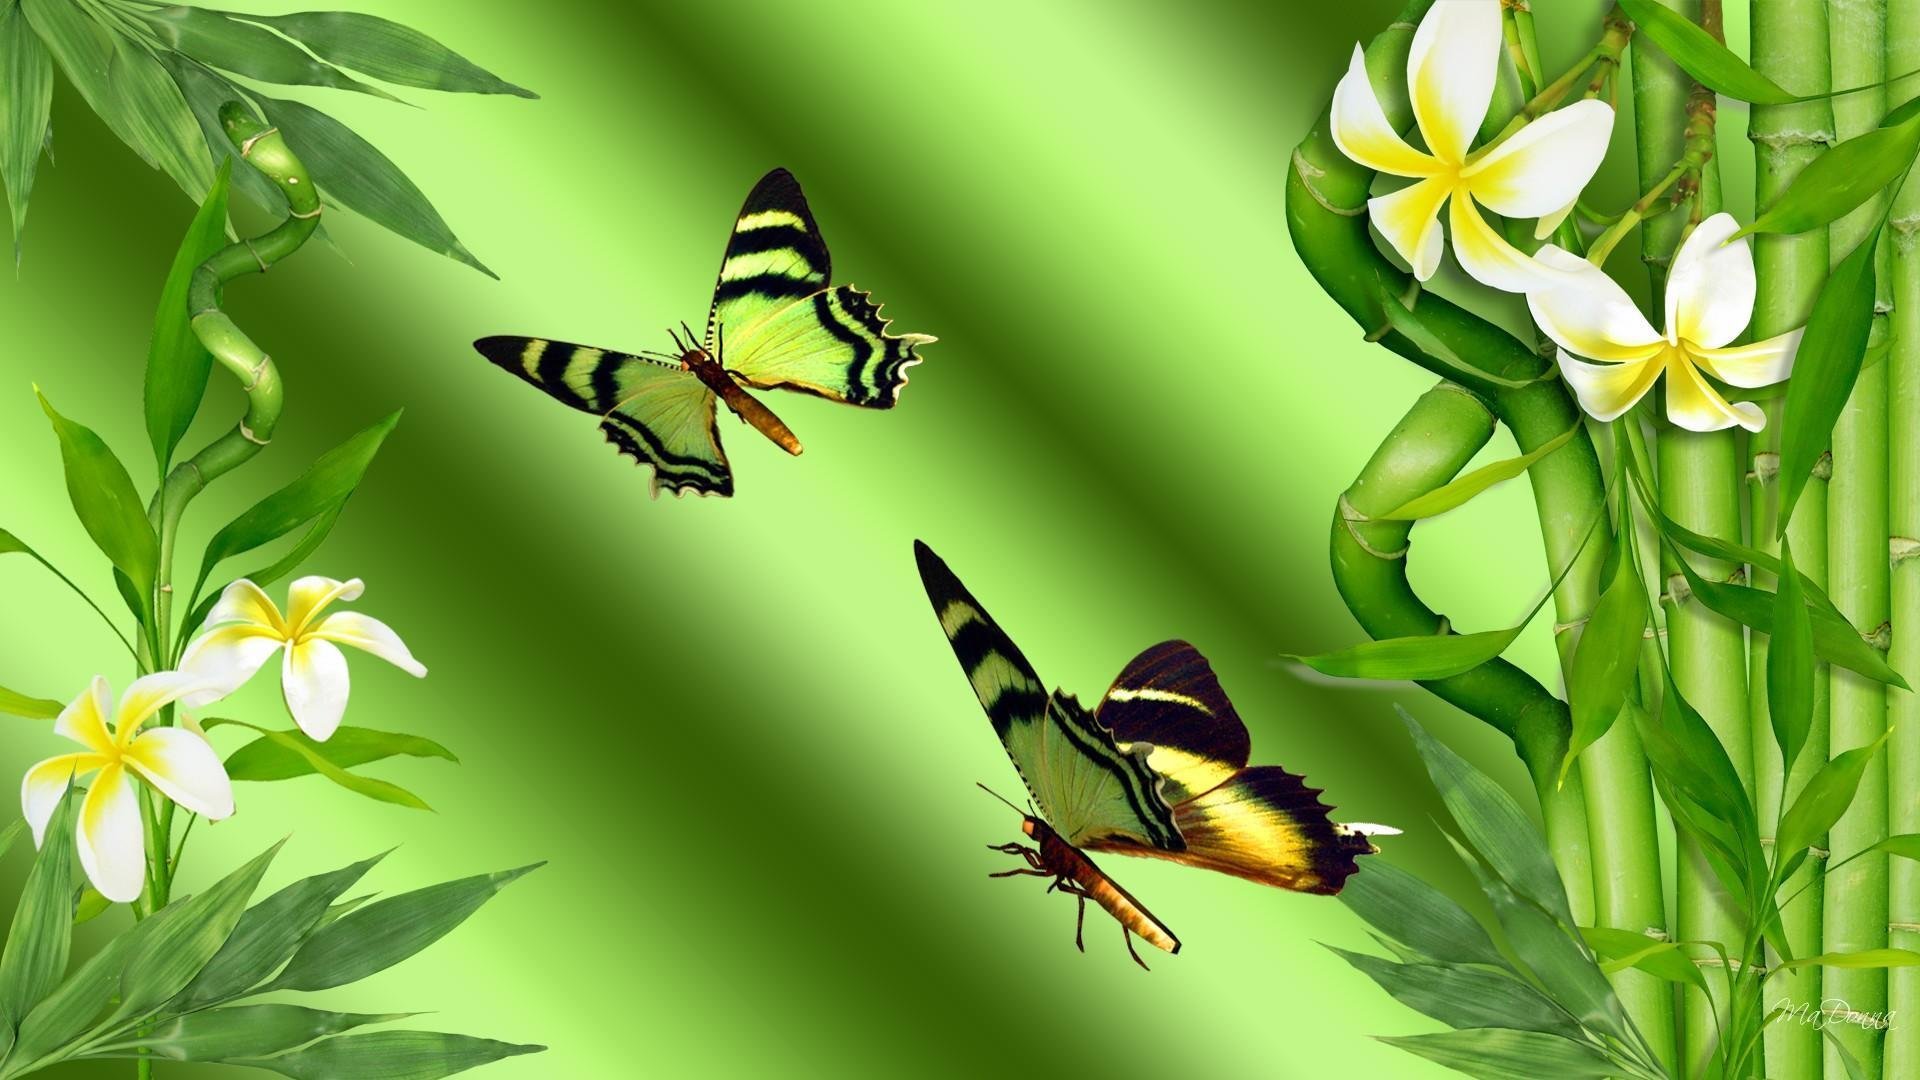 Цветок бабочка зеленый. Обои на рабочий стол бабочки. Бабочки в природе. Фотообои бабочки. Красивый фон с бабочками.